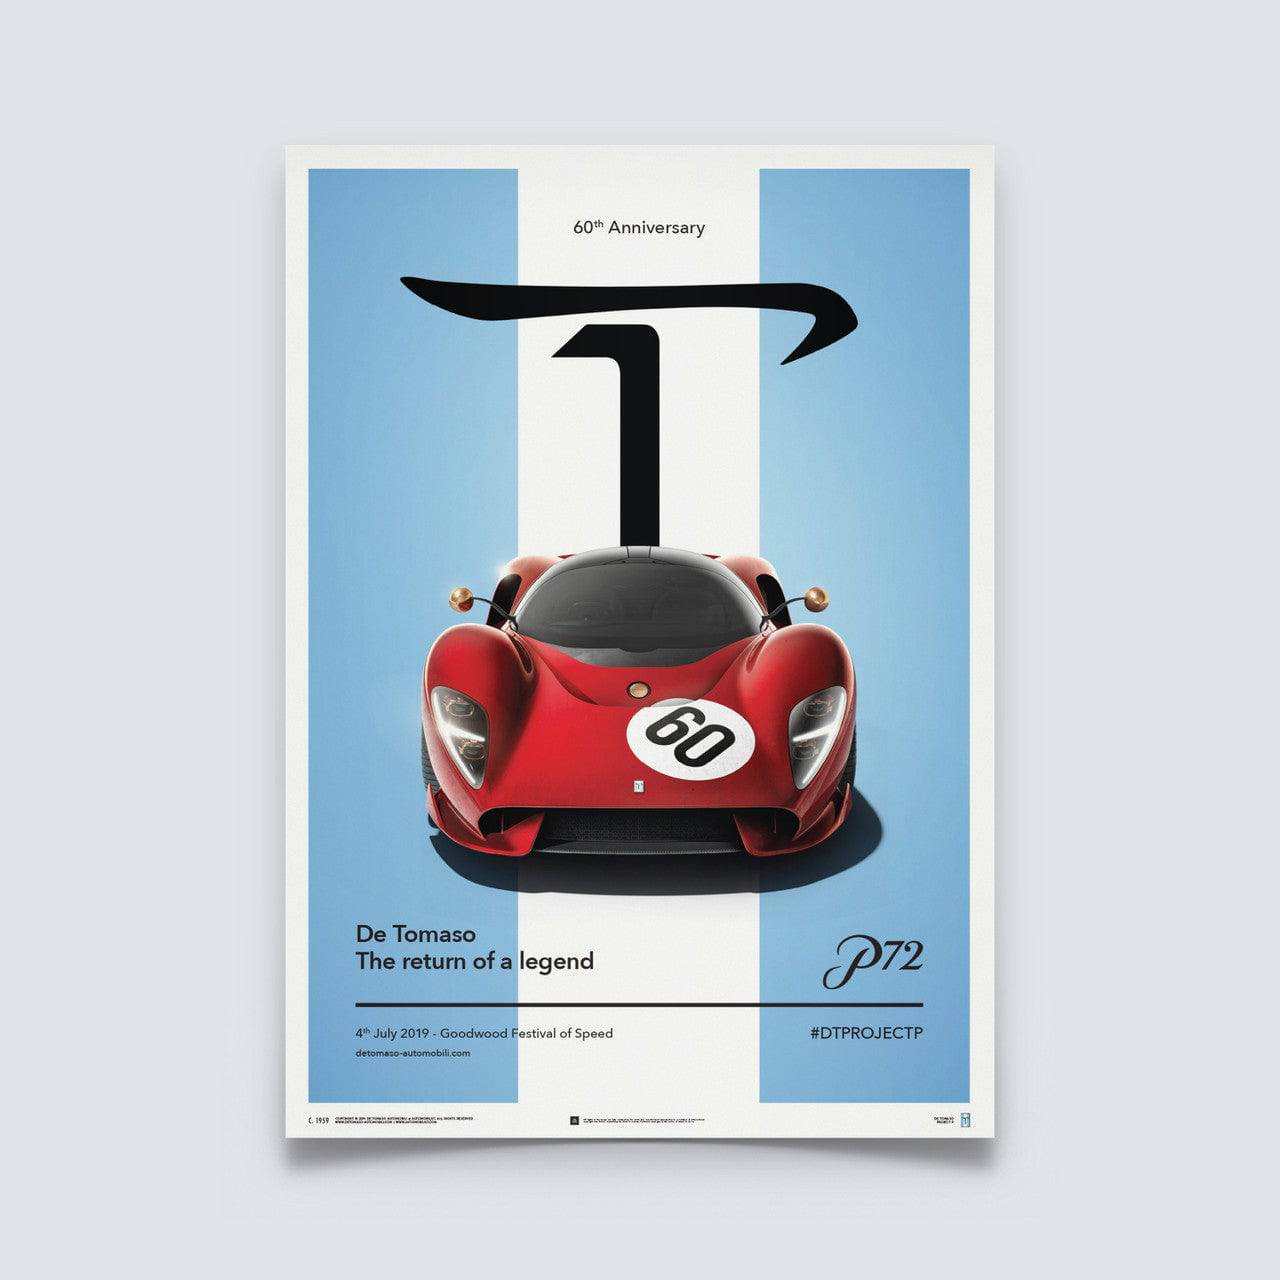 De Tomaso Project P - Front view - 2019 - Poster